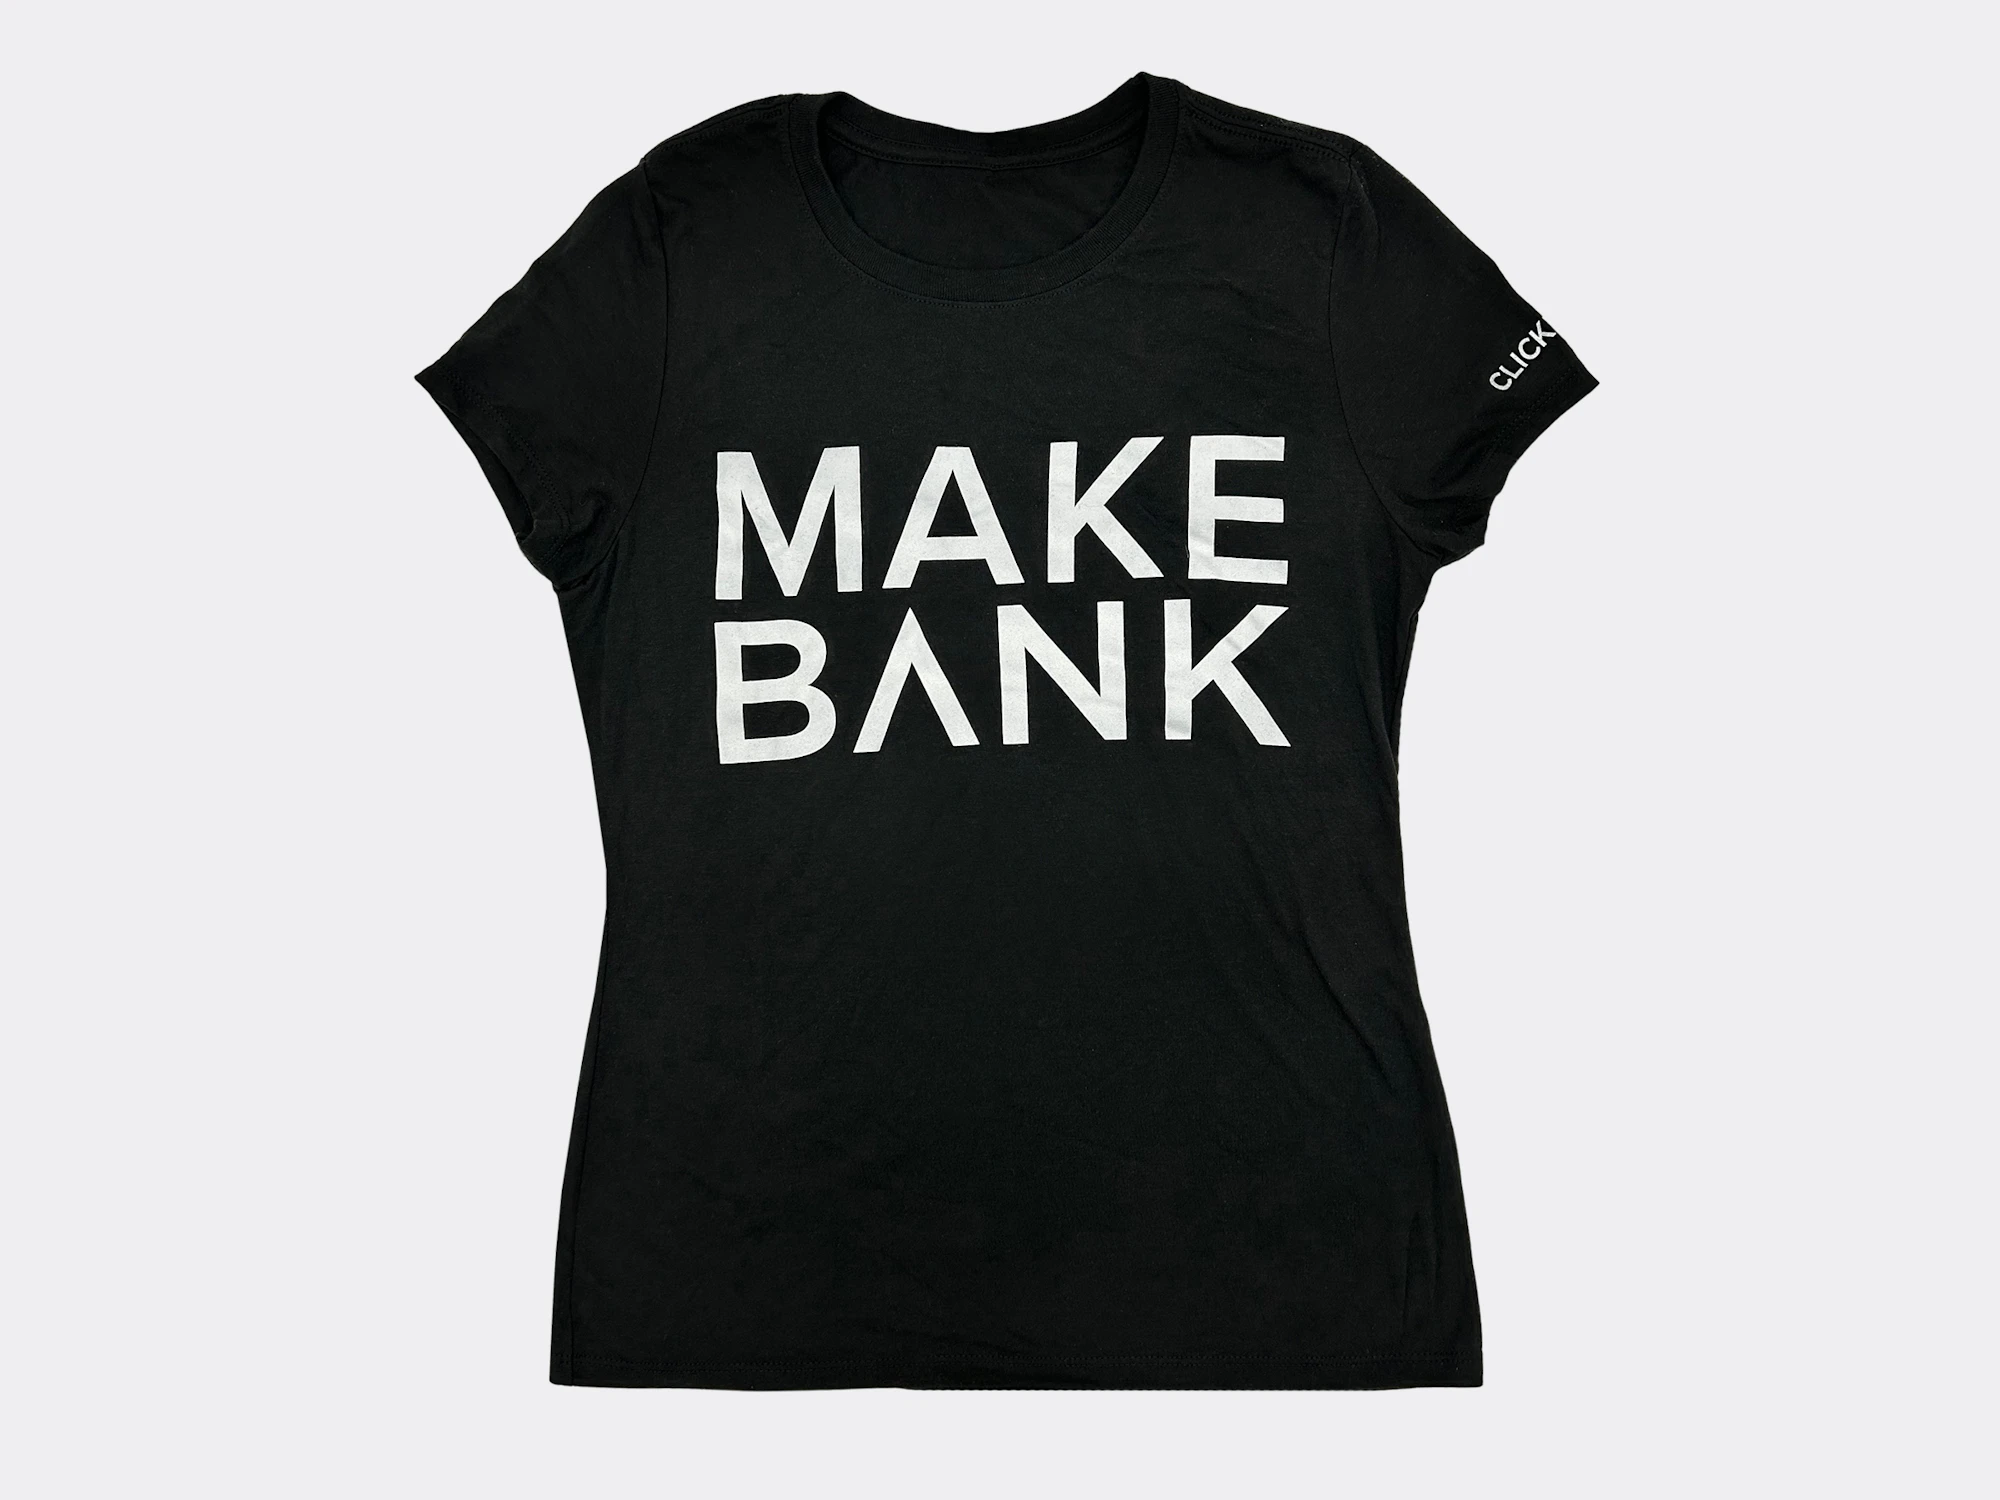 ClickBank Women's Black/White Make Bank T-Shirt